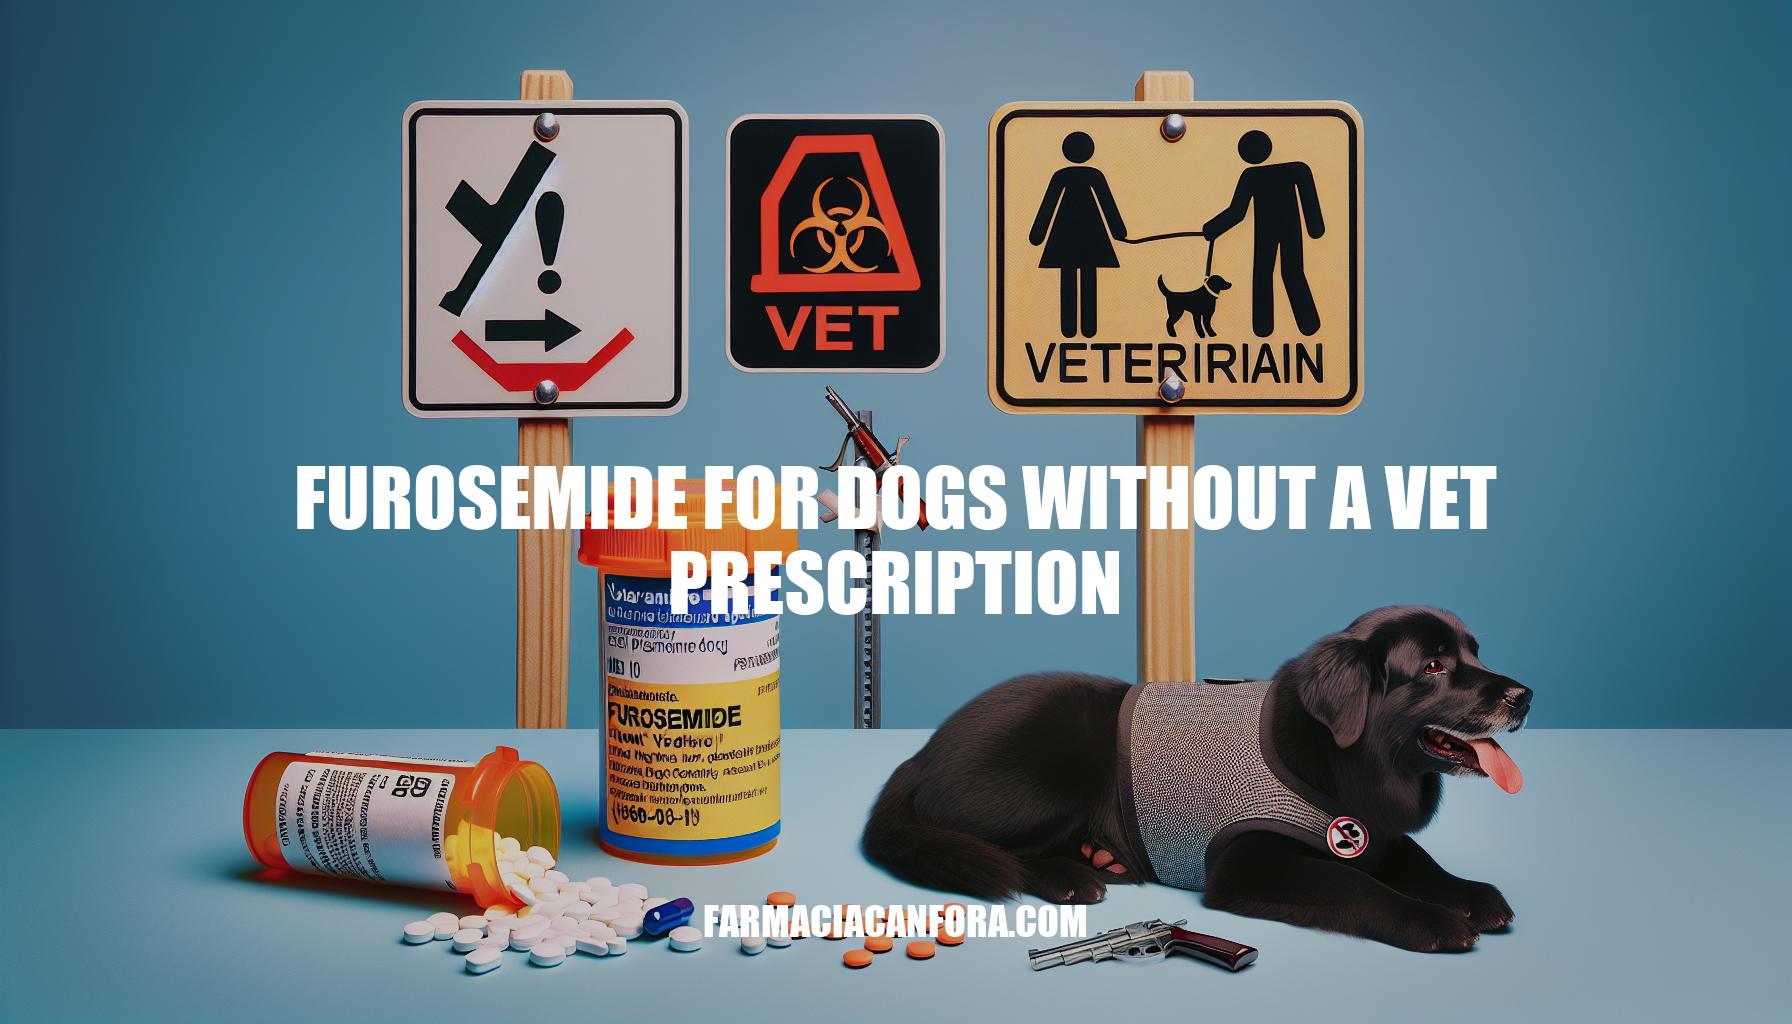 Furosemide for Dogs Without a Vet Prescription: Risks and Alternatives